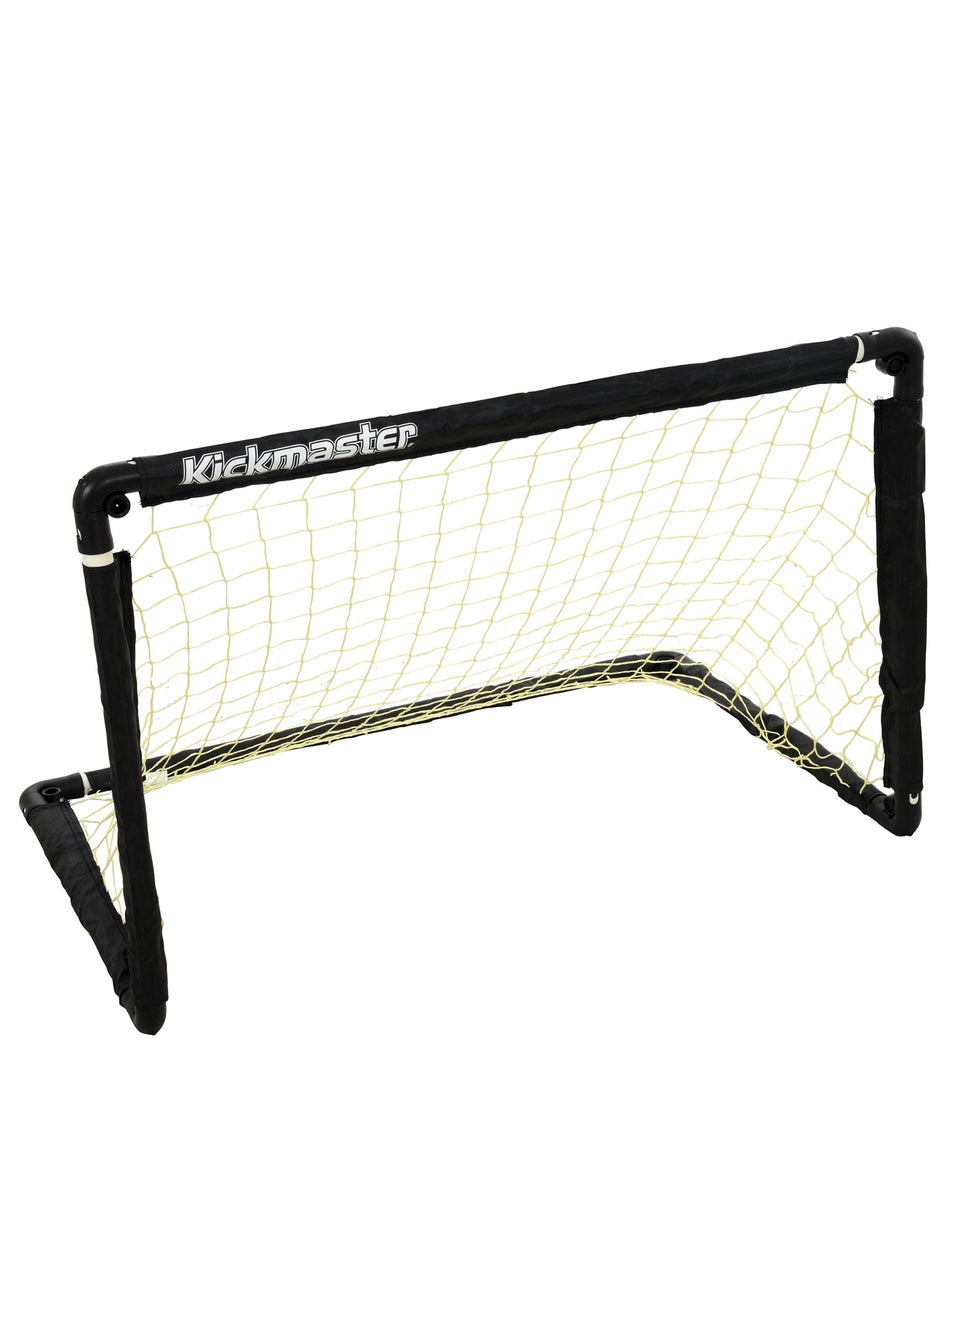 Kickmaster Black One on One Folding Goal Set (W90cm x H61cm x D59cm)